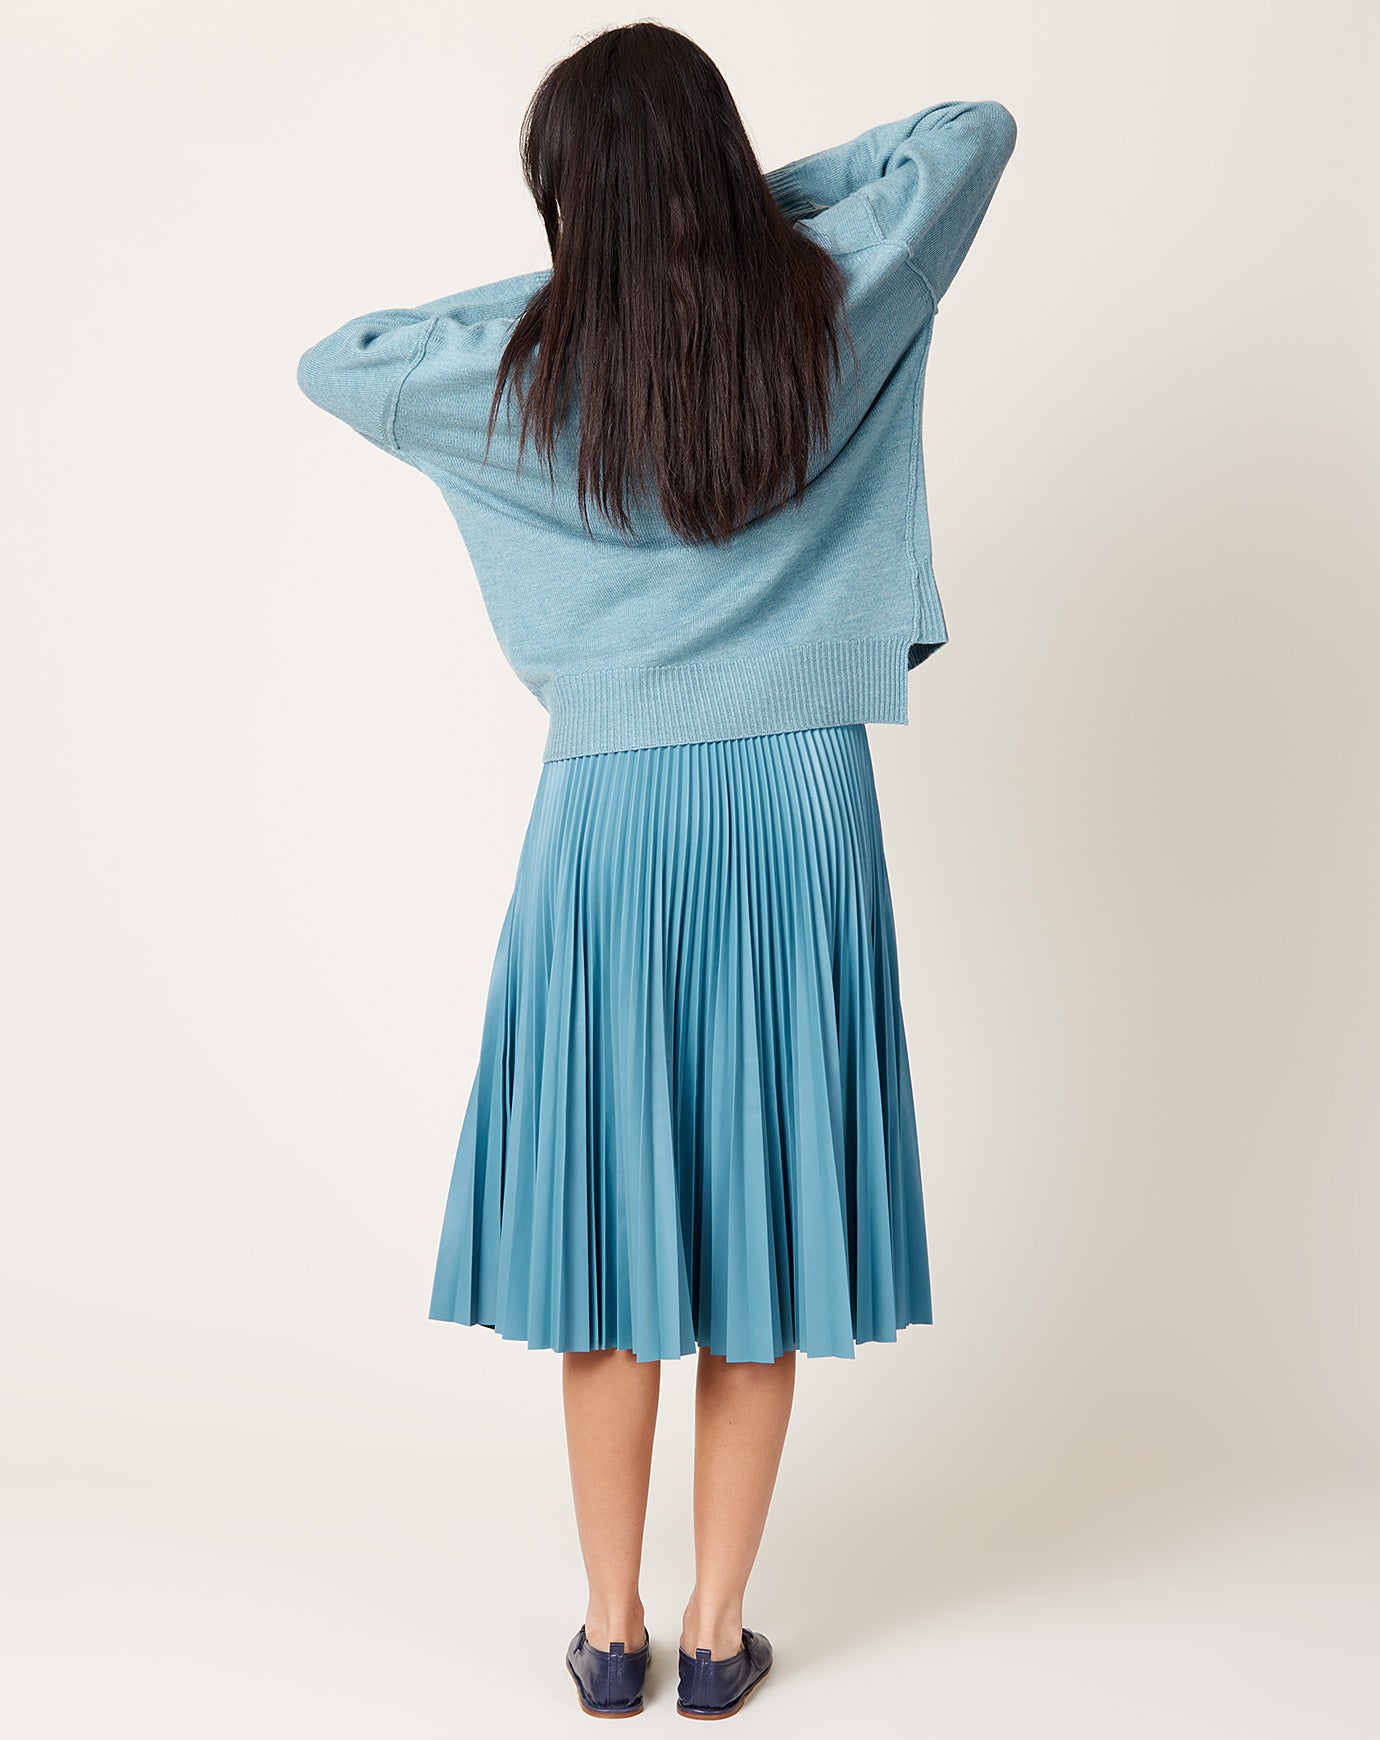 Rachel Comey Larni Skirt in Blue Leatherette